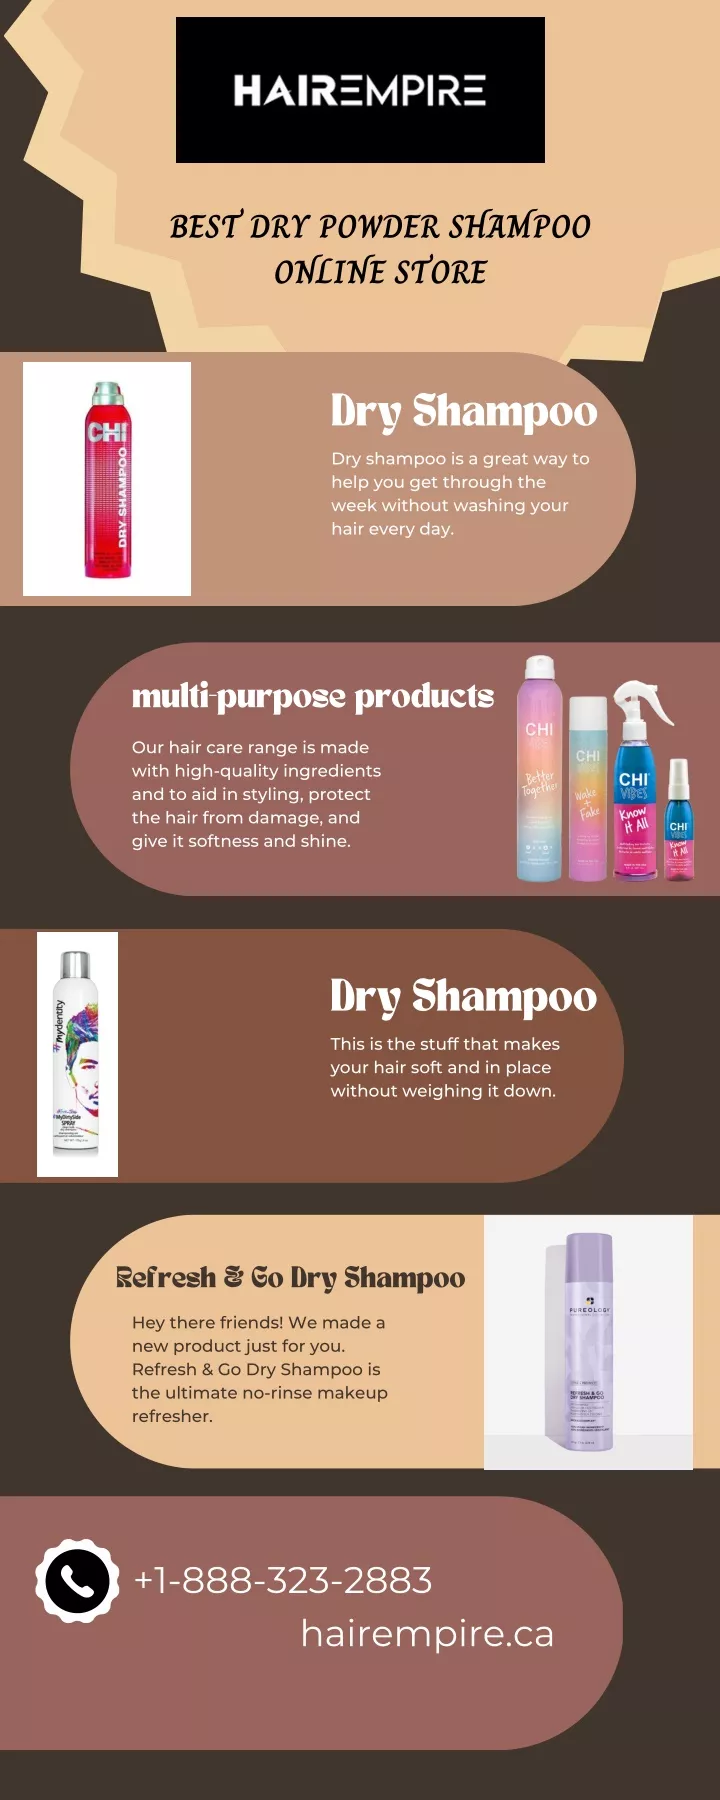 best dry powder shampoo online store